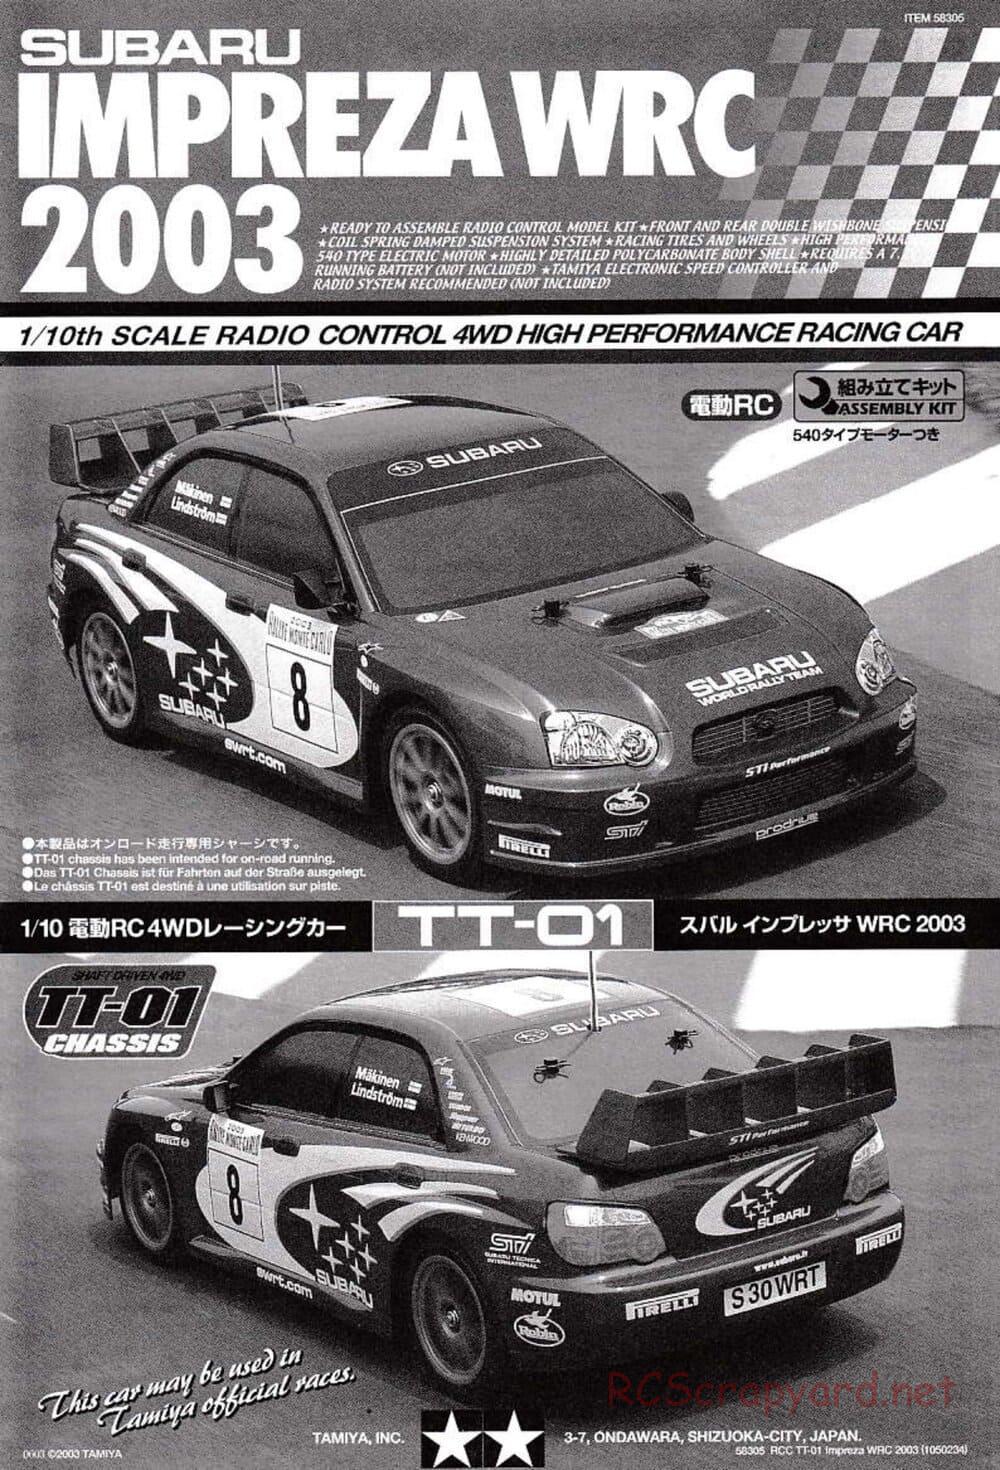 Tamiya - Subaru Impreza WRC 2003 - TT-01 Chassis - Manual - Page 1